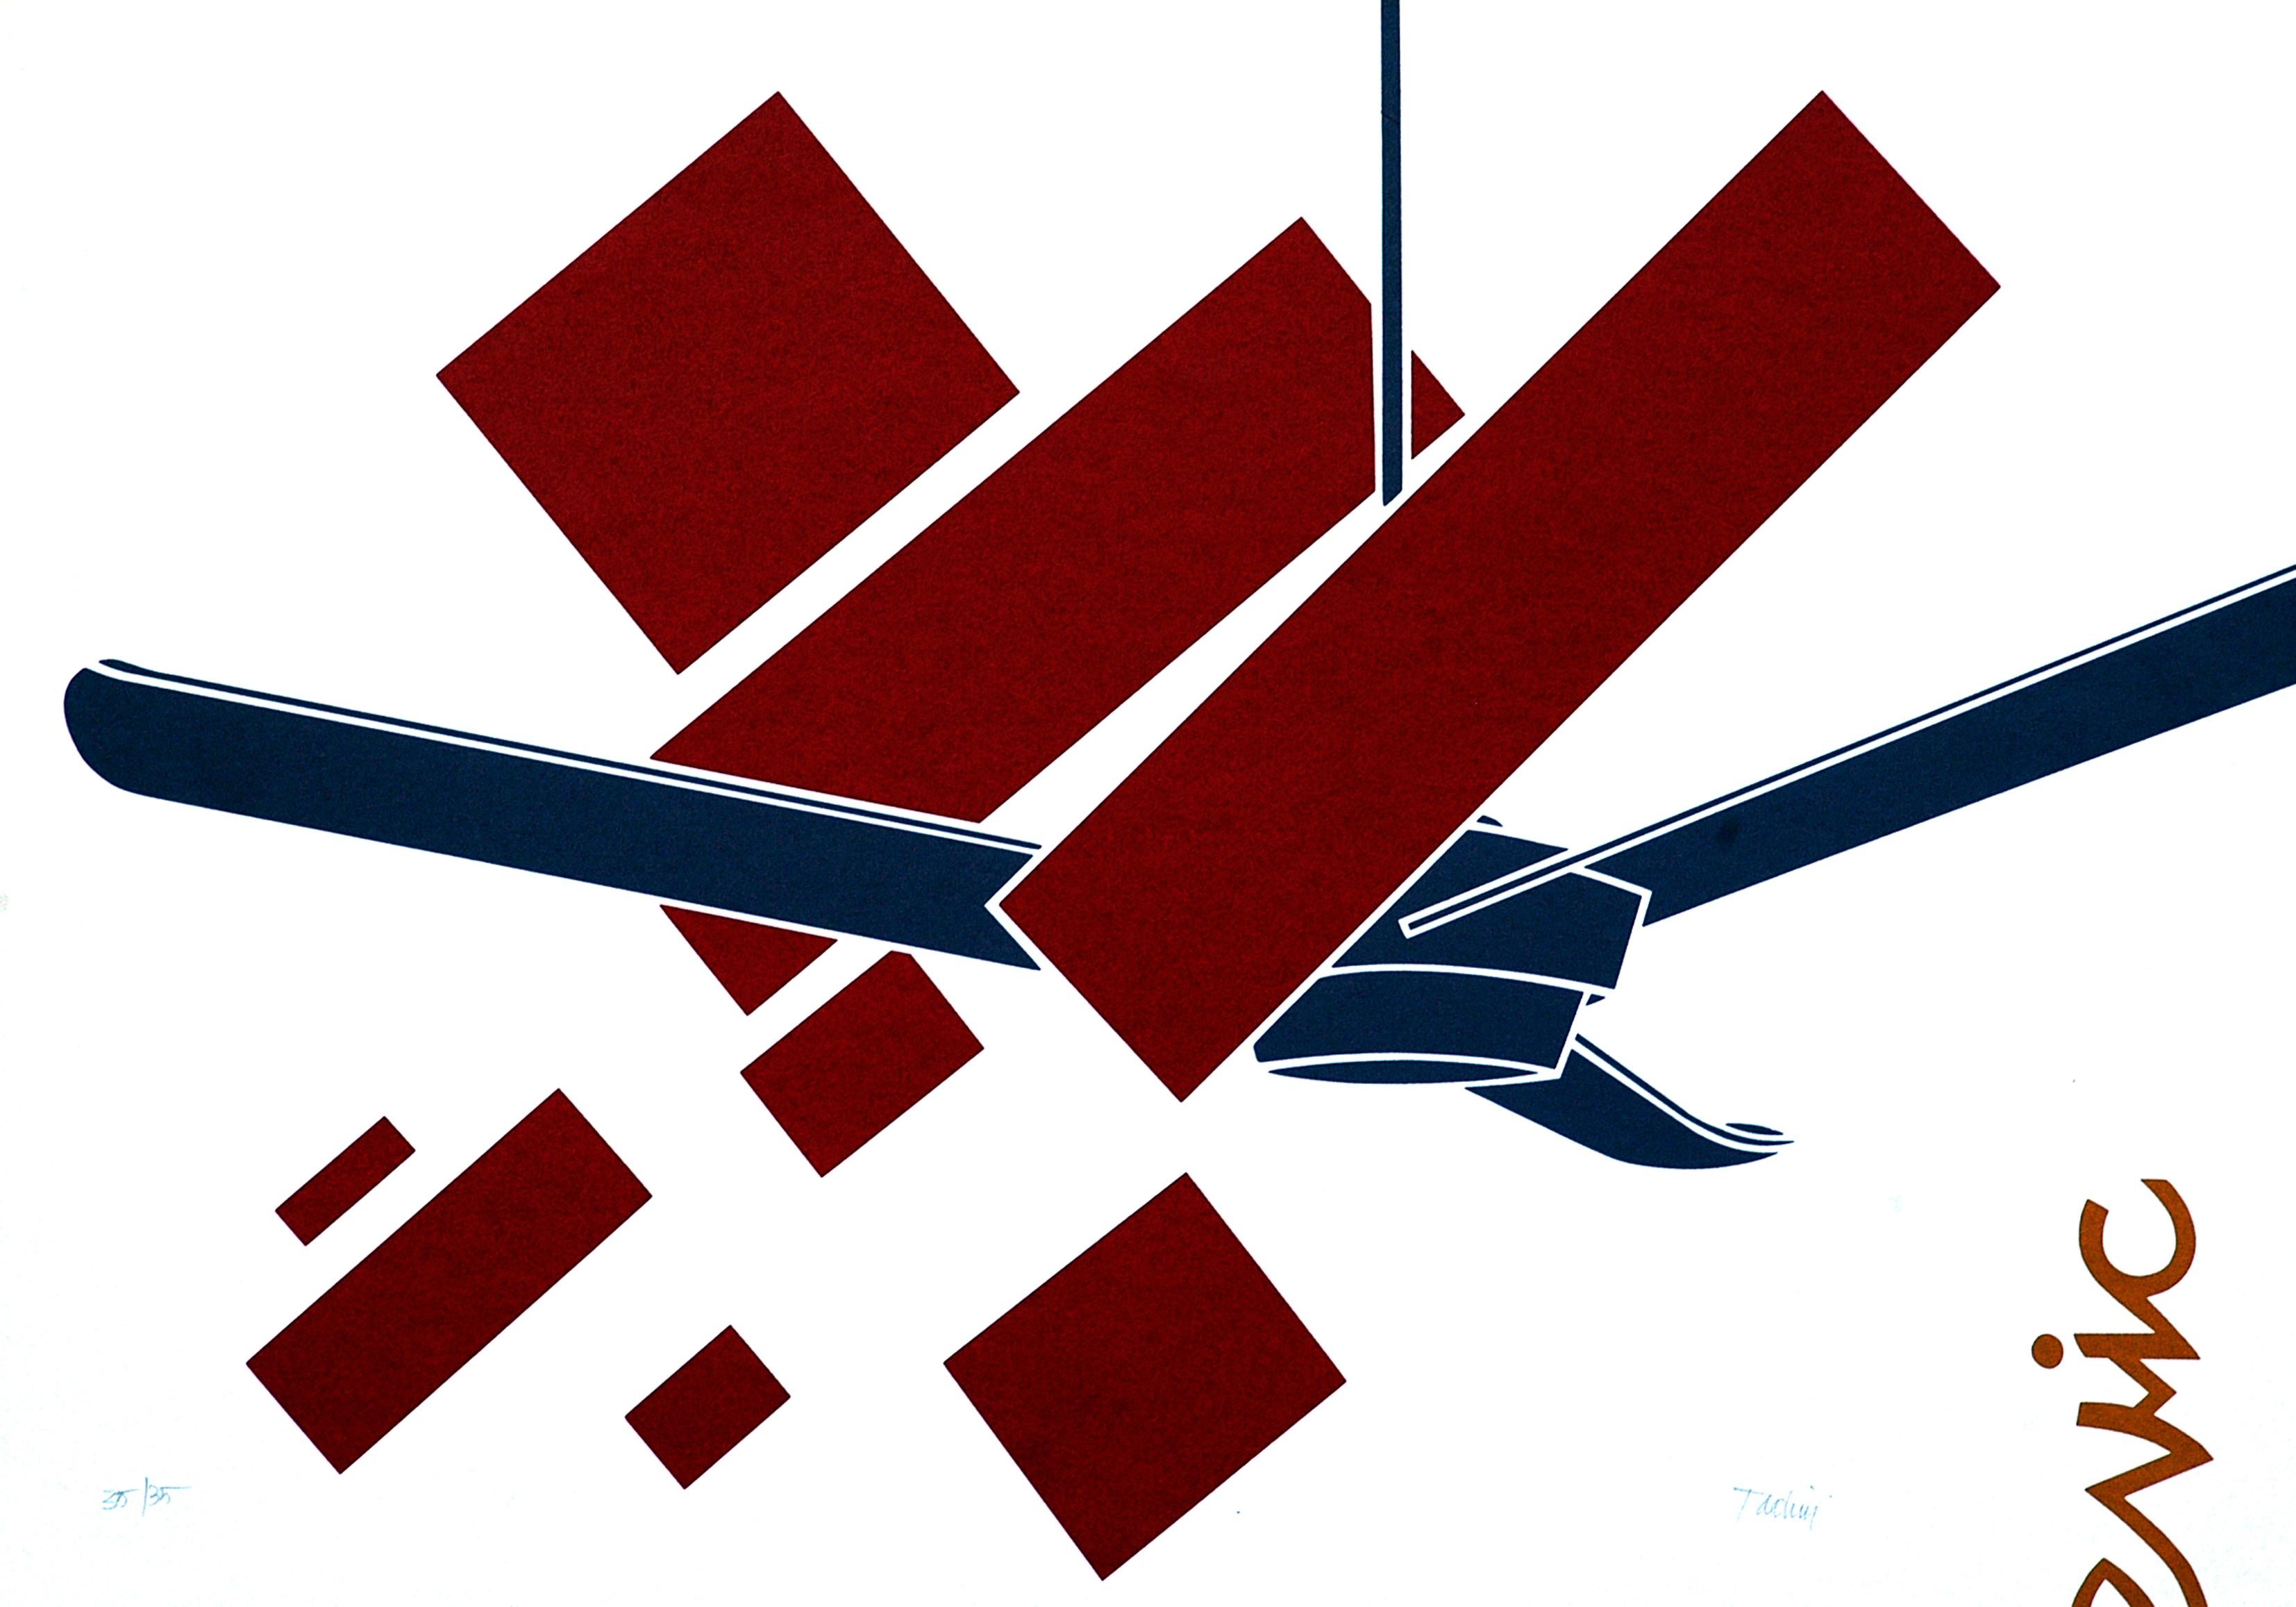 Emilio Tadini Abstract Print - Blade and Red - Original Screen Print by E. Tadini - 1970 ca